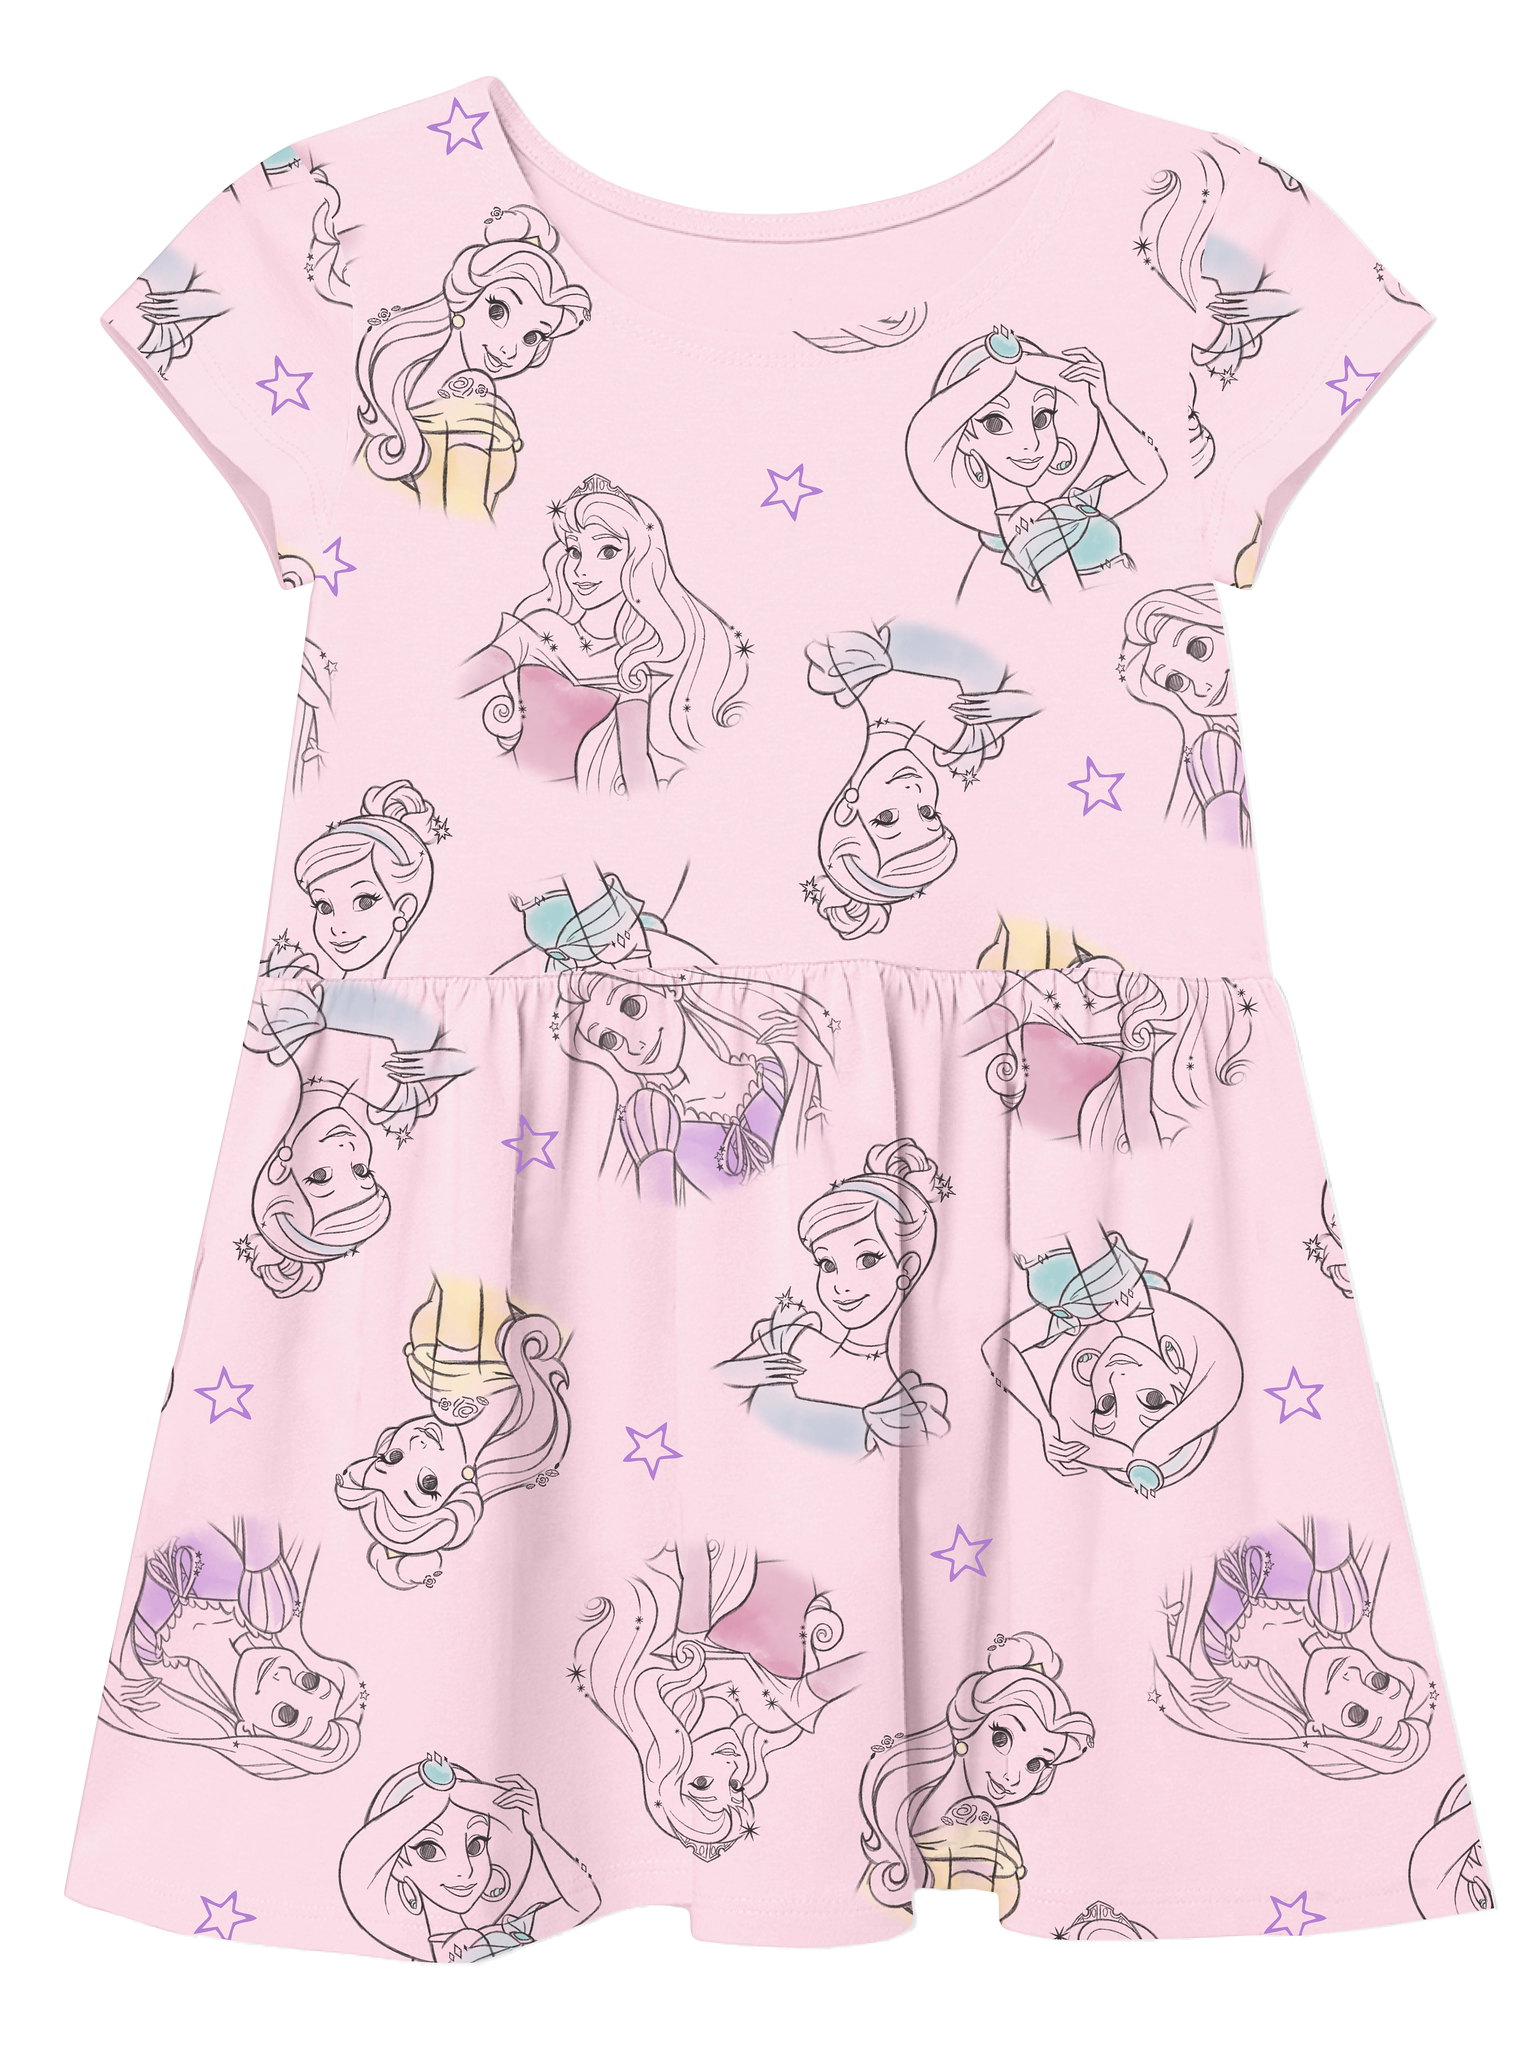 Disney Princess Head Shots Casual Dress (Toddler Girls & Little Girls) - image 1 of 6